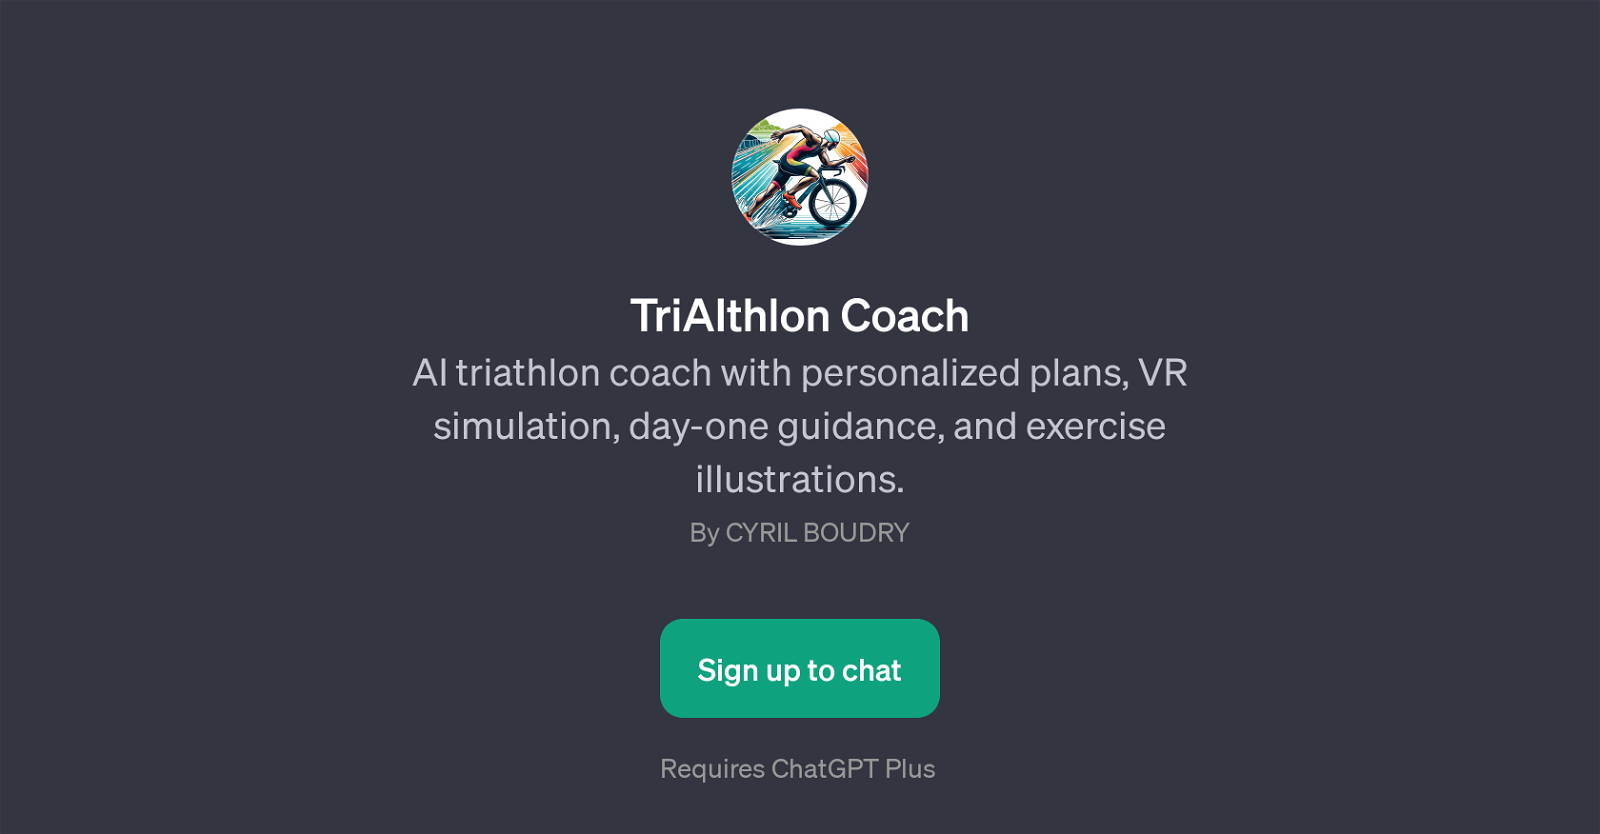 TriAIthlon Coach website